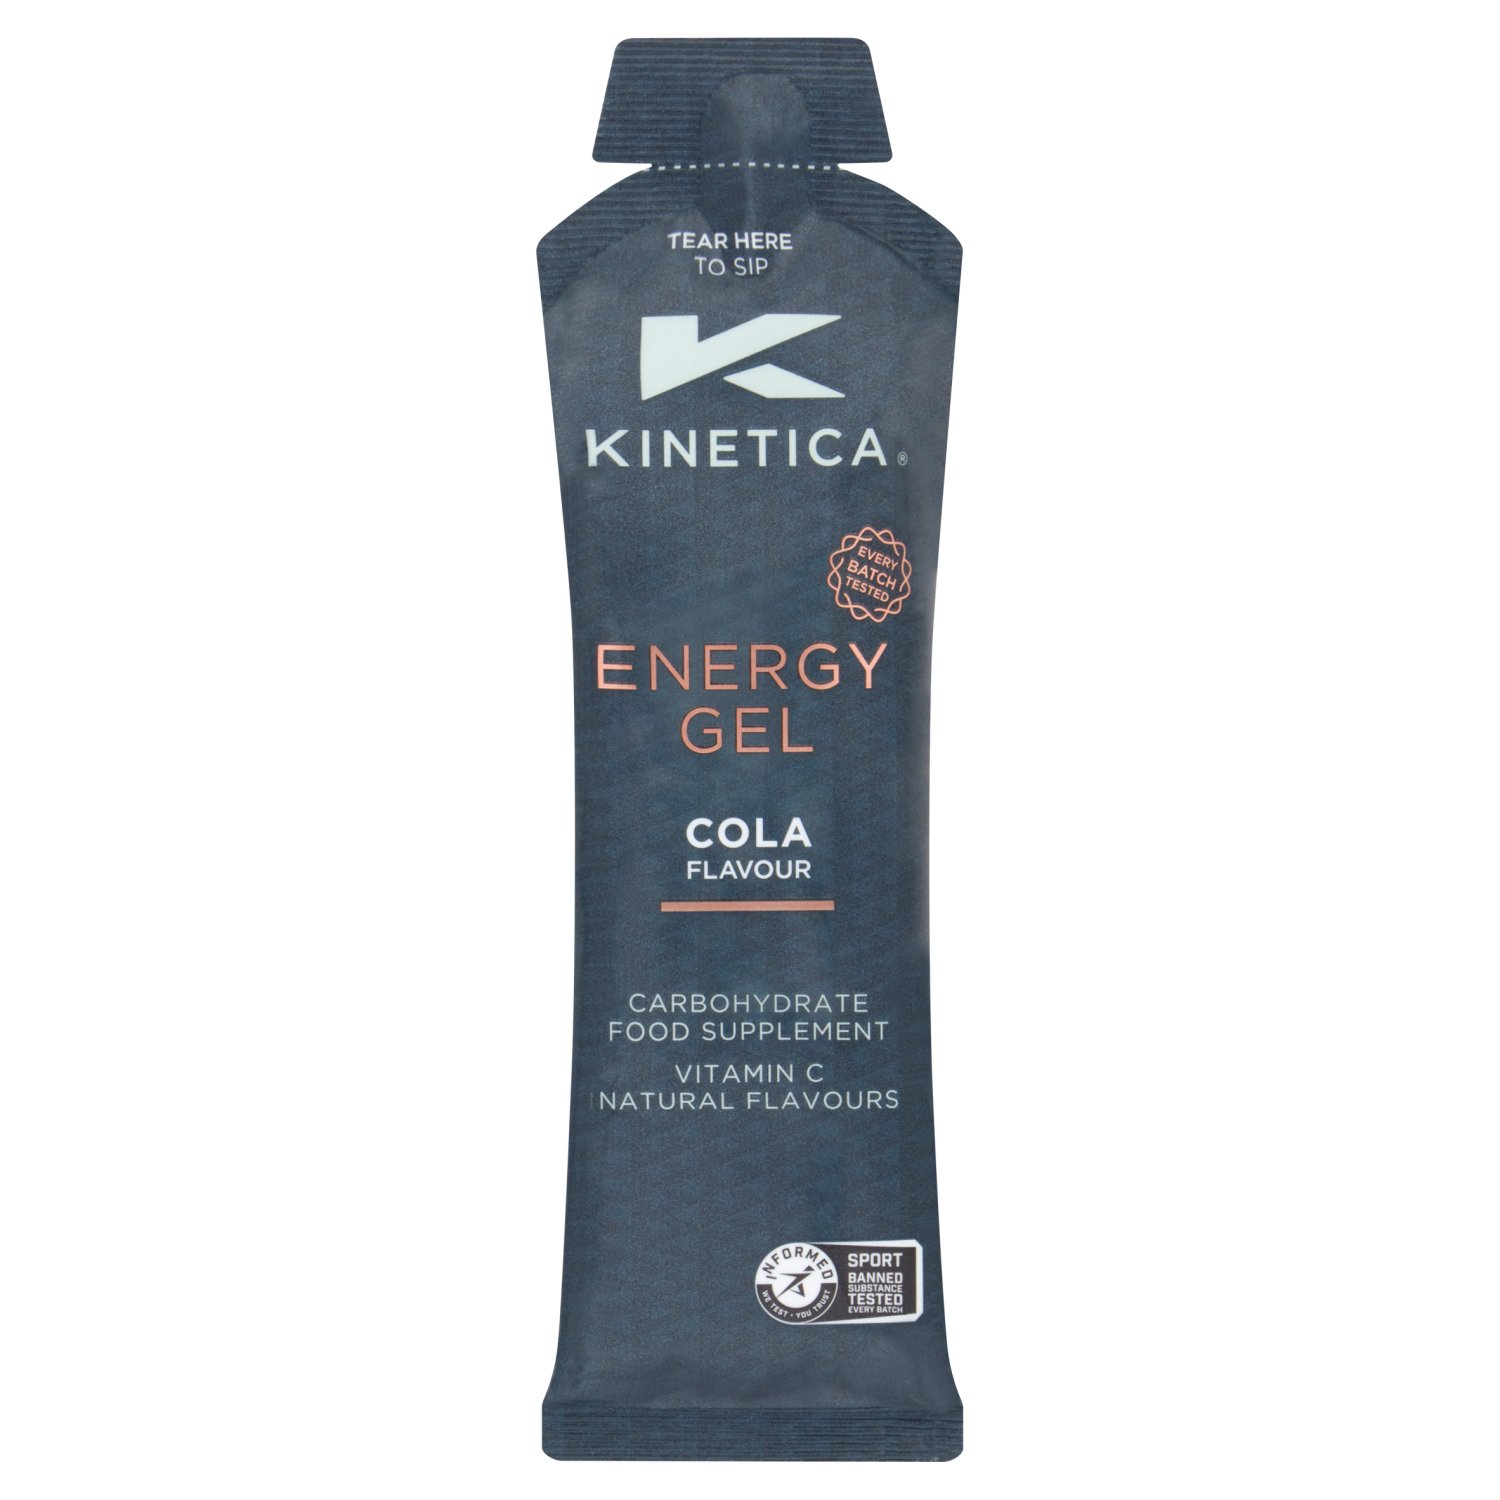 Kinetica Energy Gel Cola Flavour (70 g)